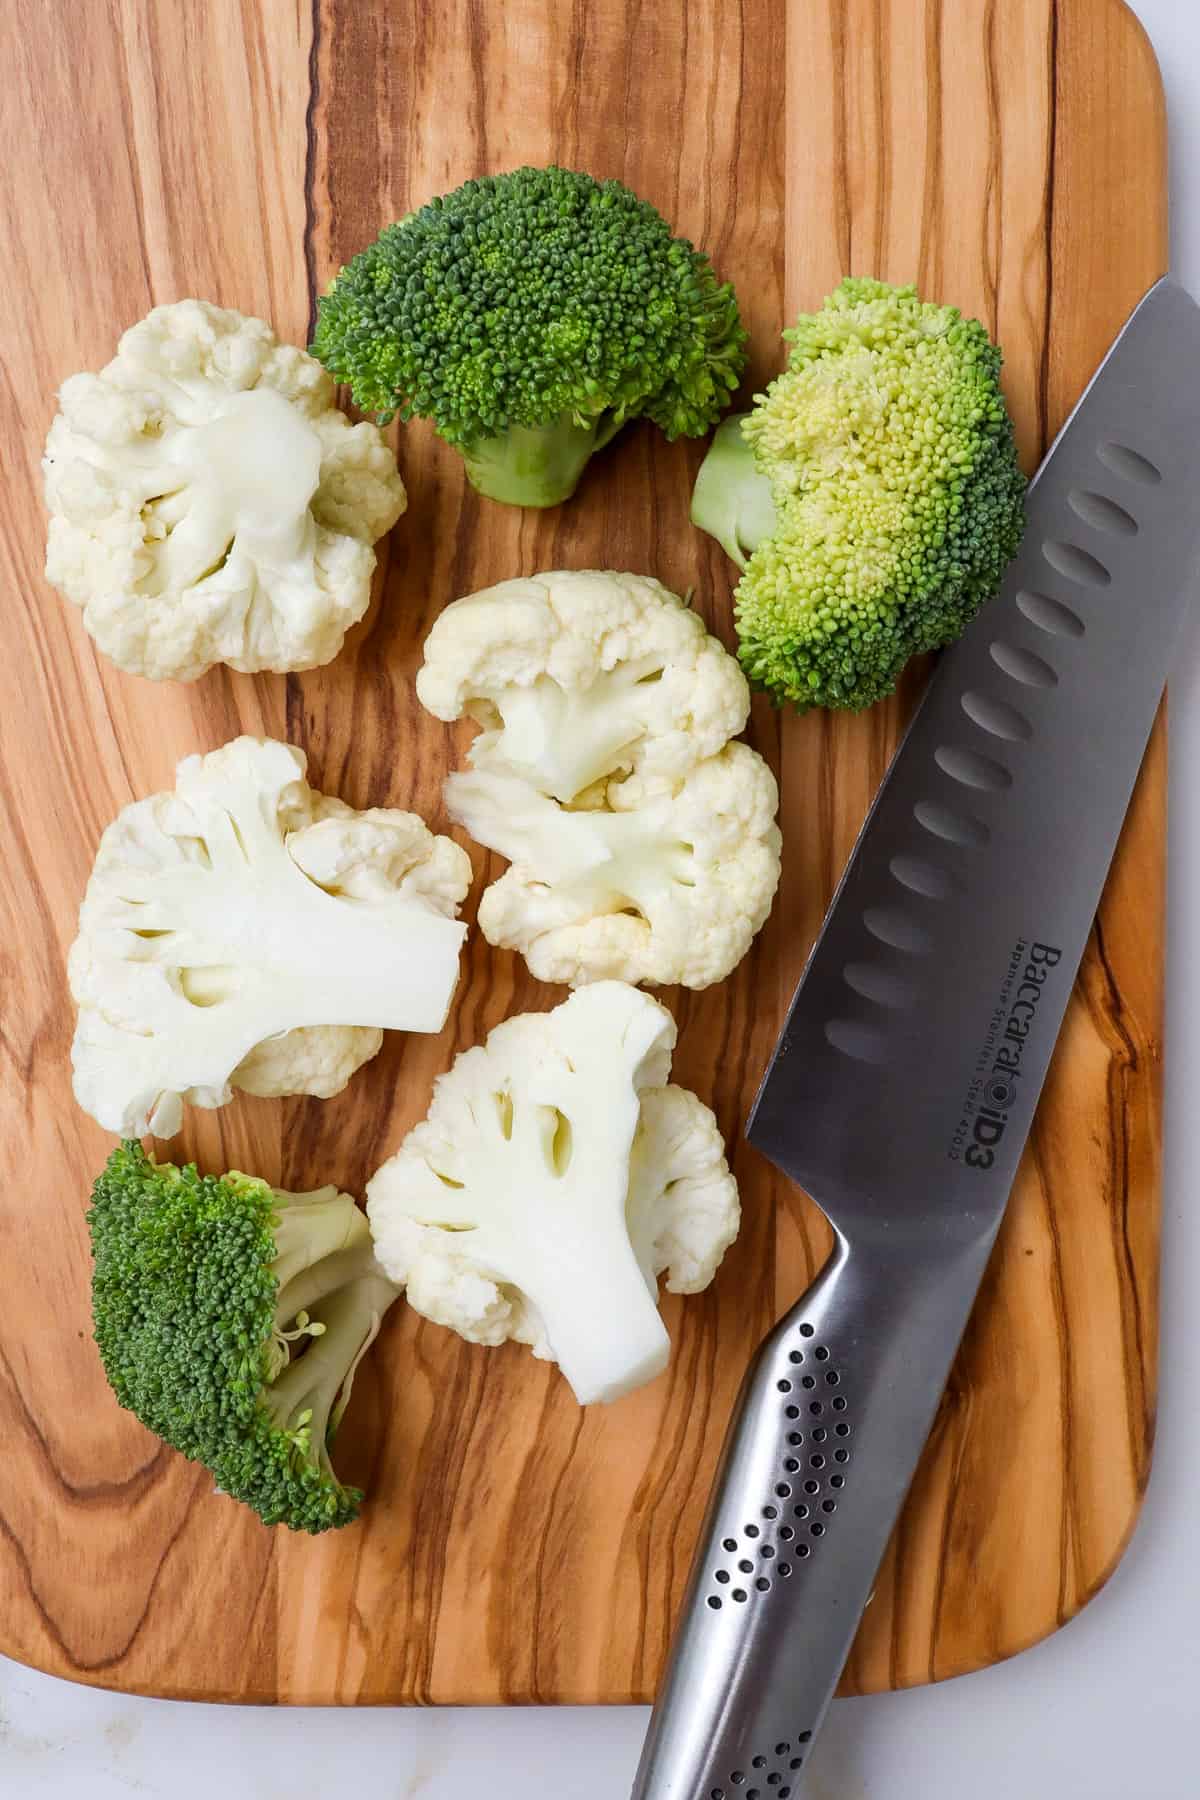 Broccoli and cauliflower florets on a chopping board.